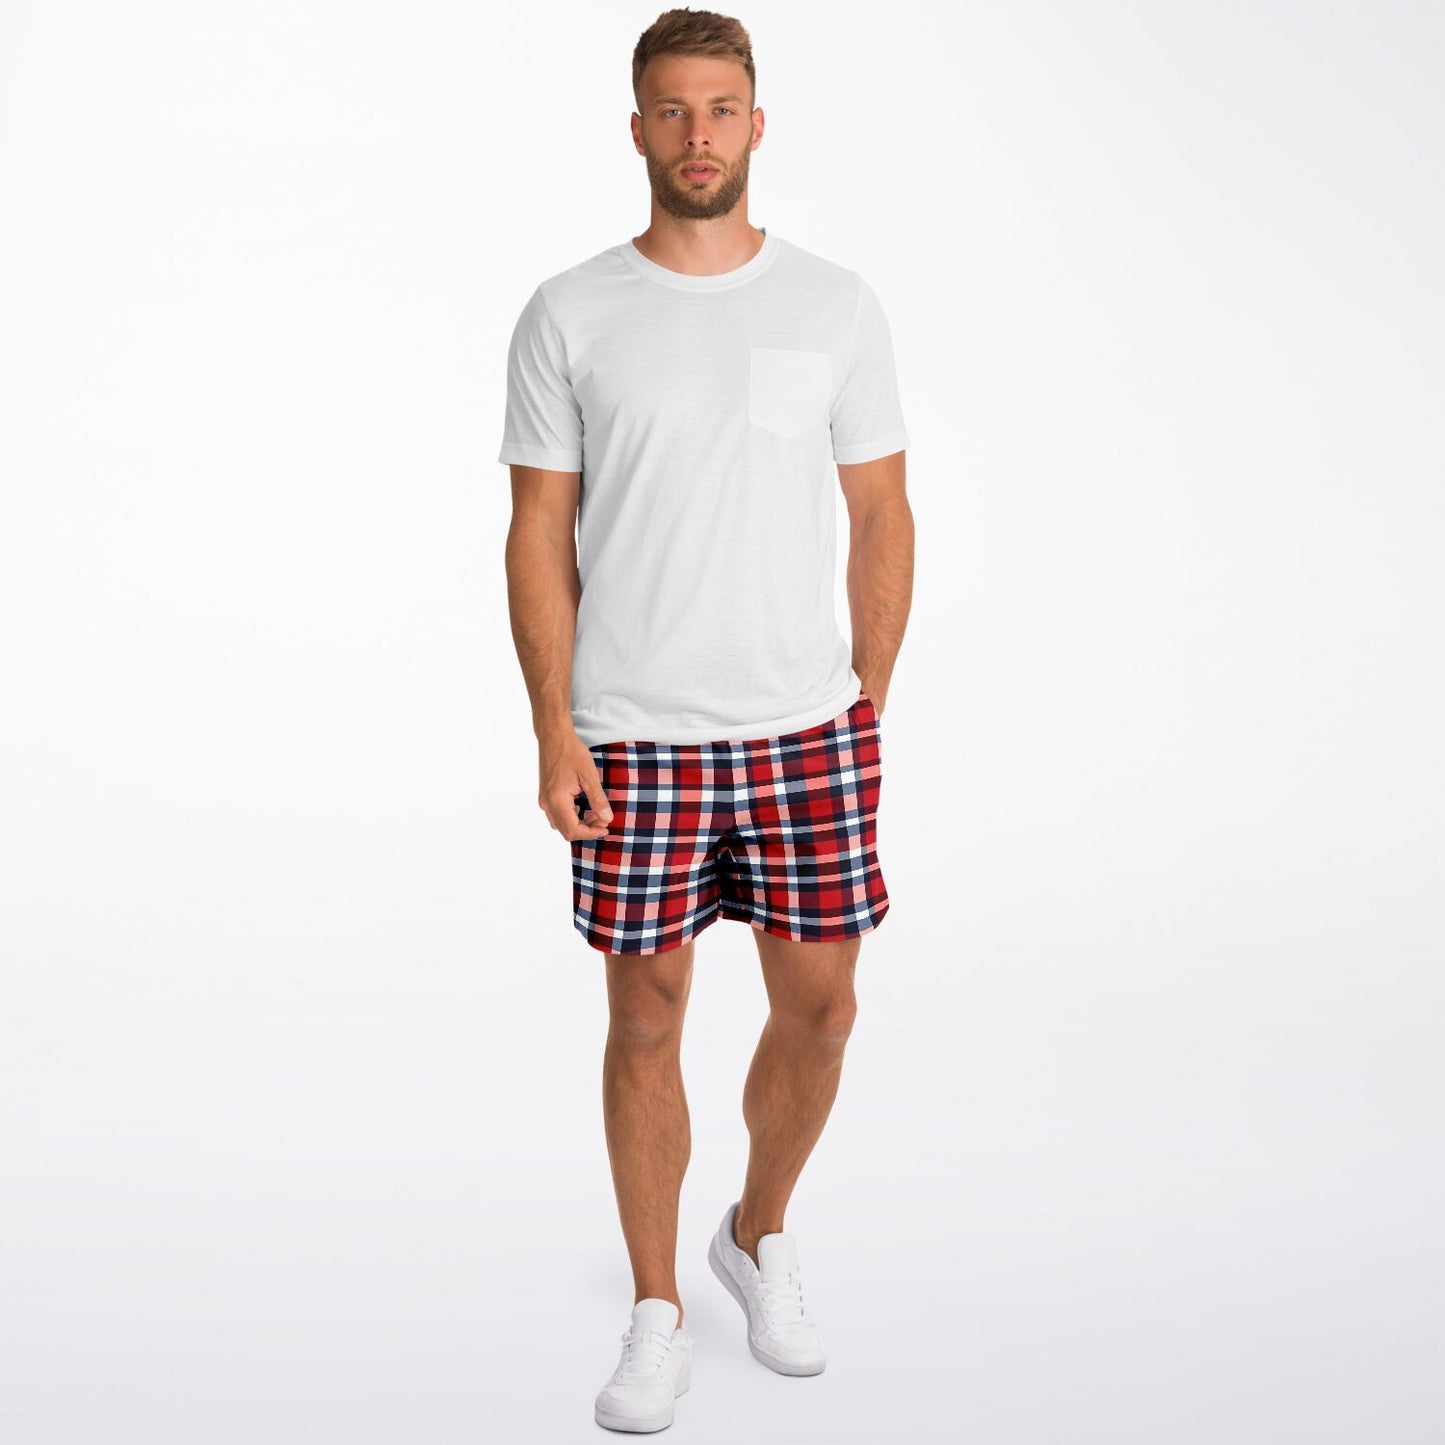 Buffalo Plaid Men Shorts, Red White Blue Tartan Check Beach Casual with Pockets 7 Inch Inseam Drawstring Casual Designer Summer